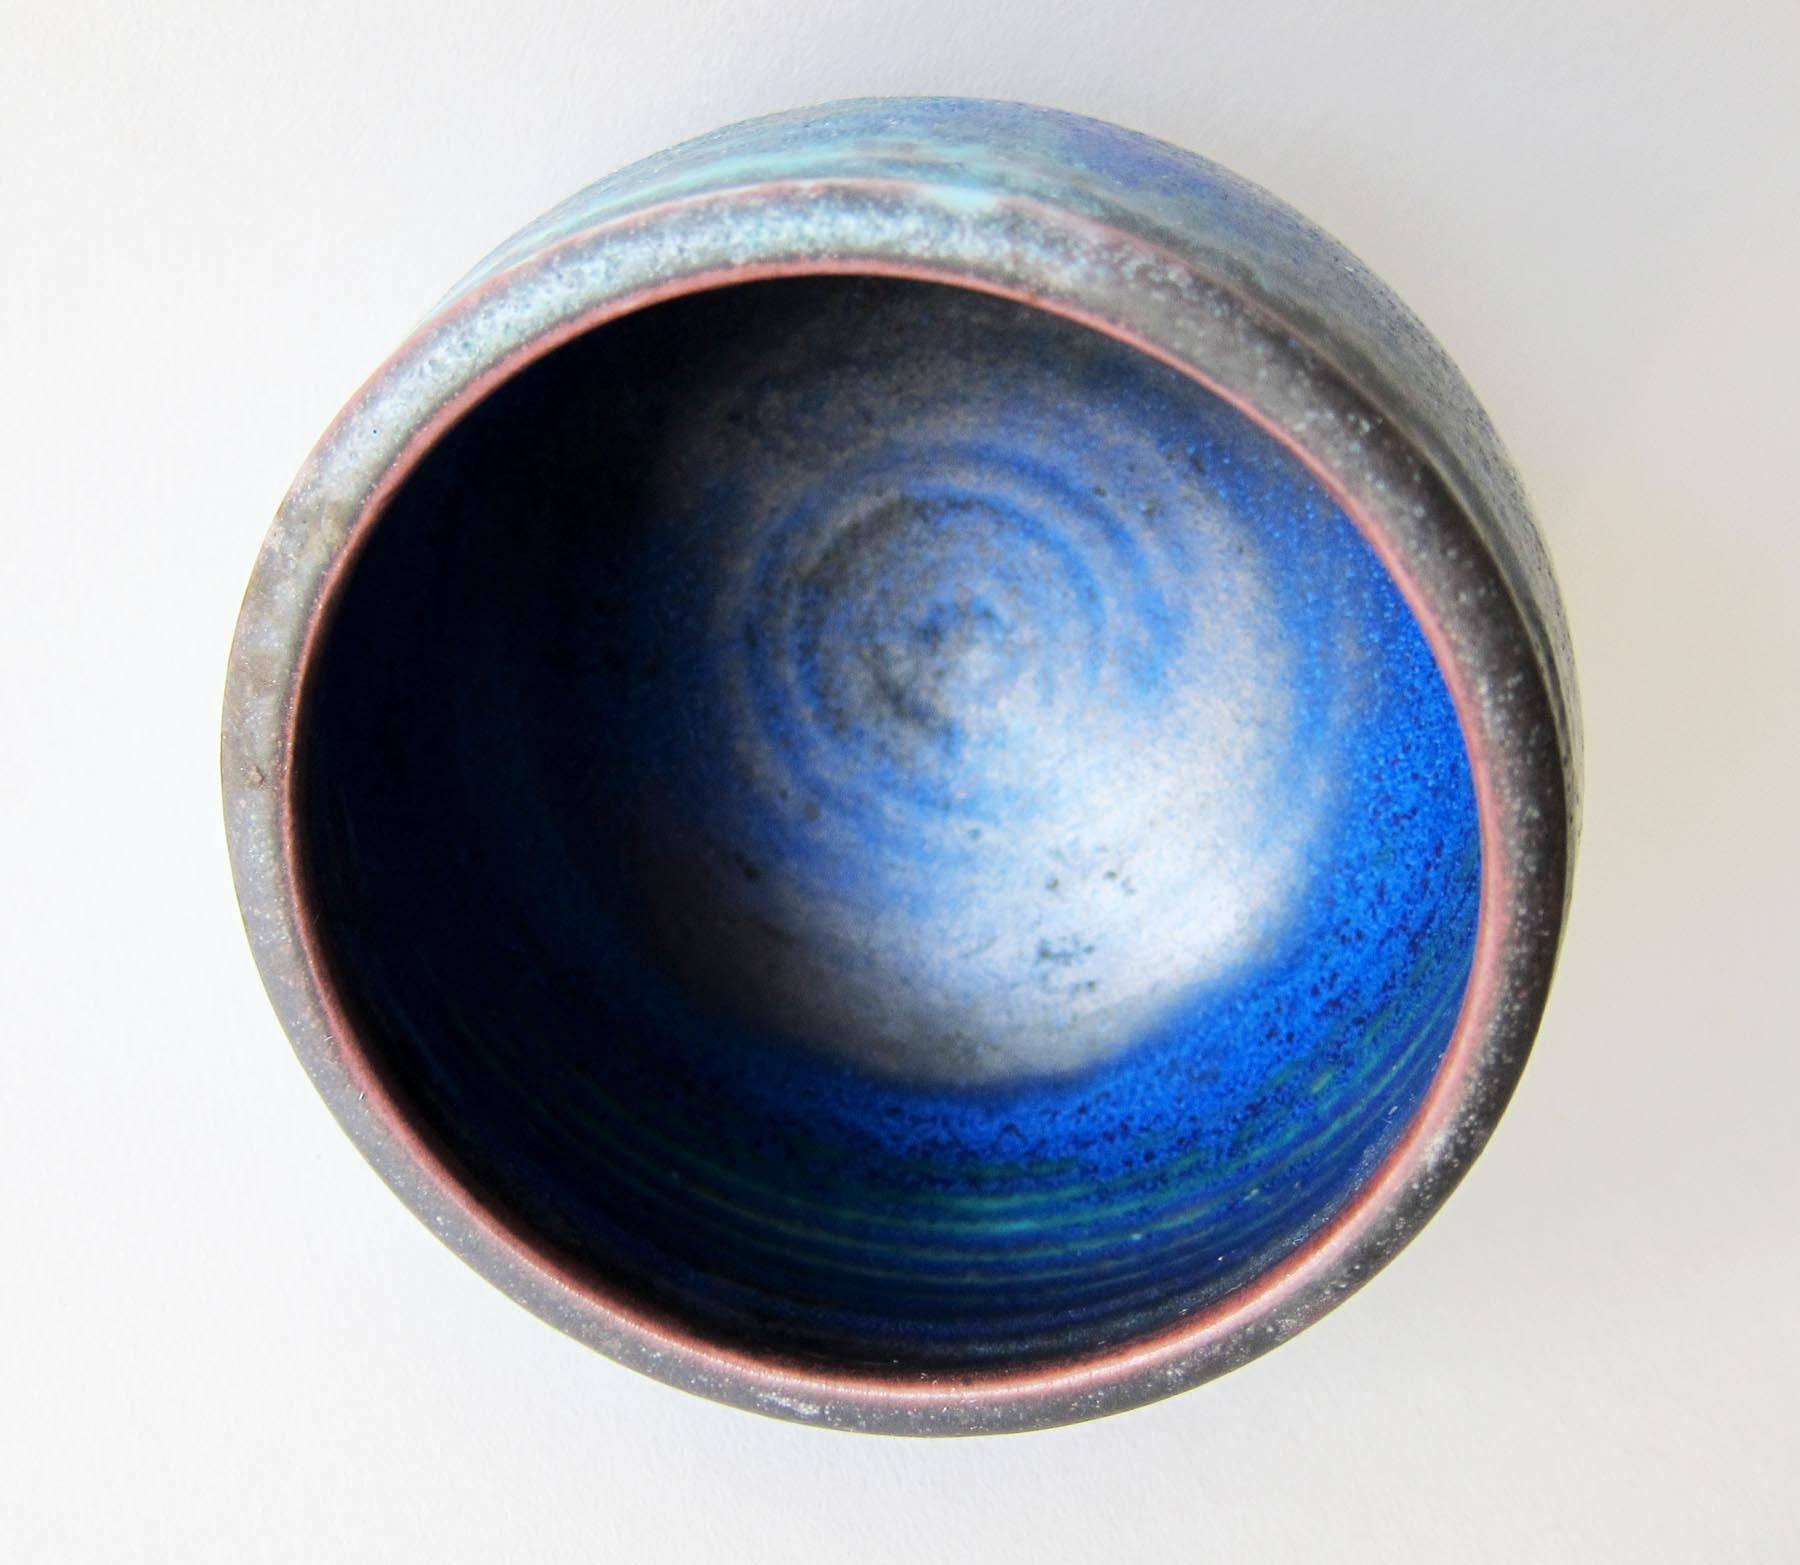 Stoneware bowl with cobalt glazed interior, created by Otto and Vivika Heino of Ojai, California. Bowl measures 3.25